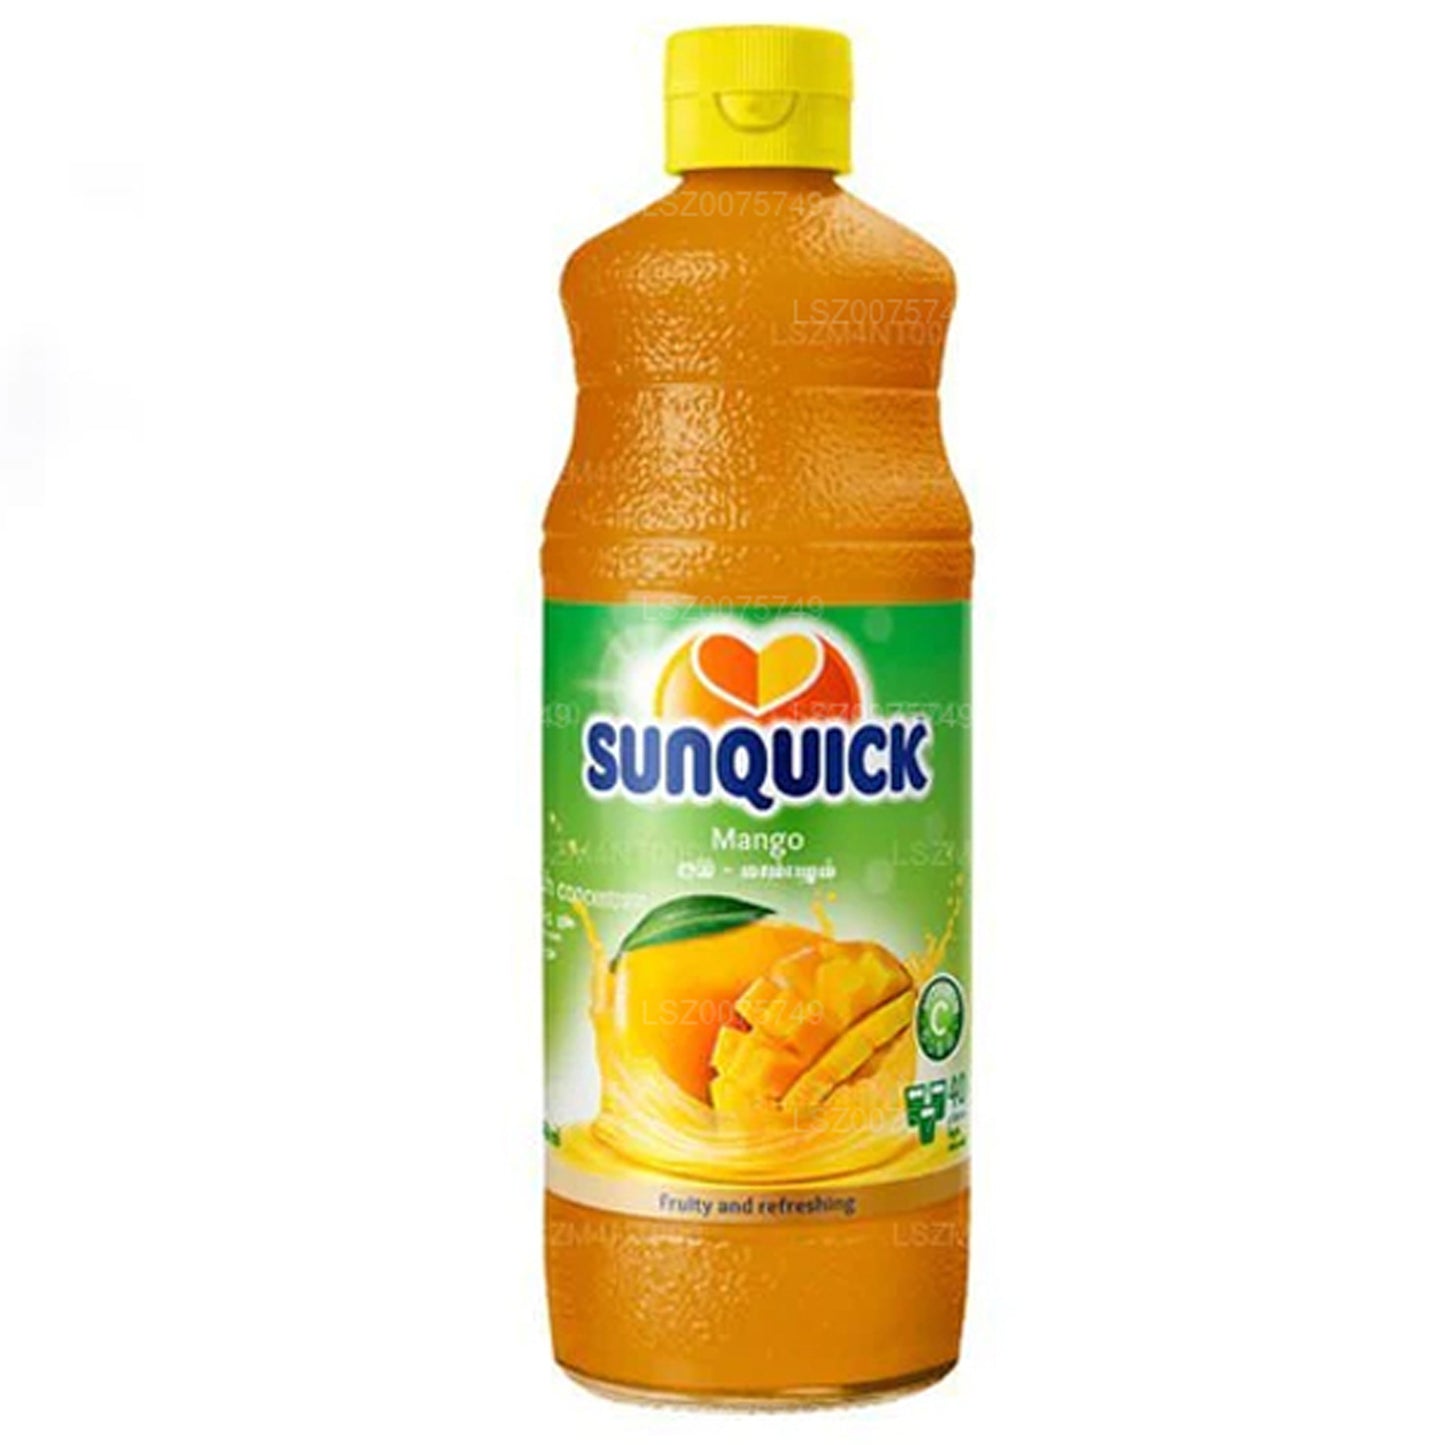 Sunquick Mango (840 ml)